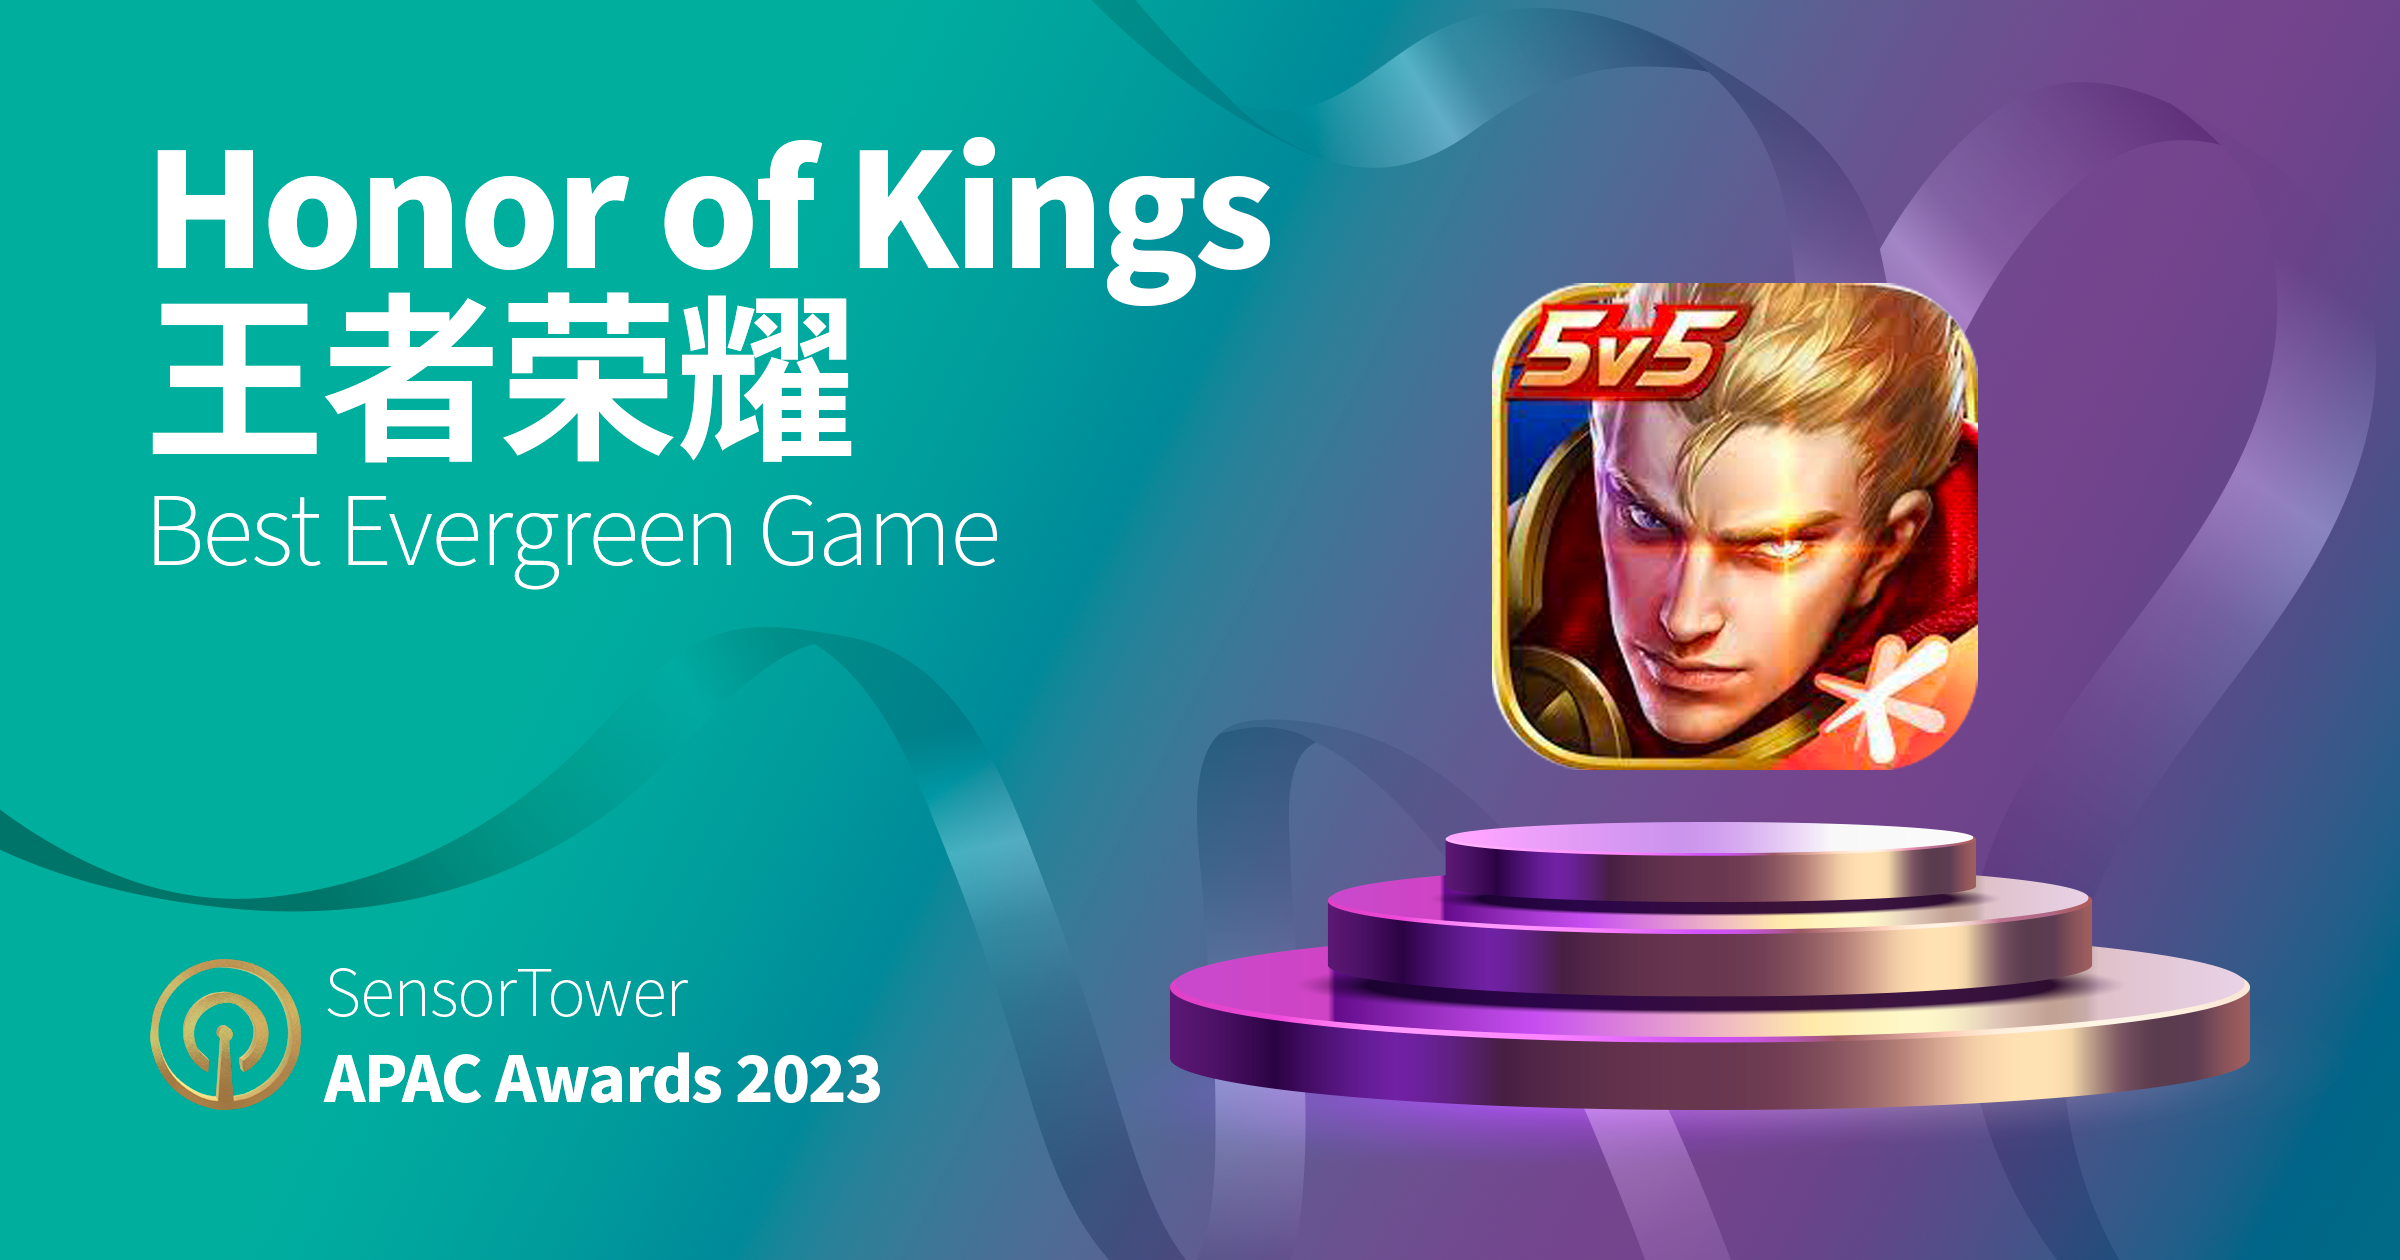 Honor of Kings (Best Evergreen Game)